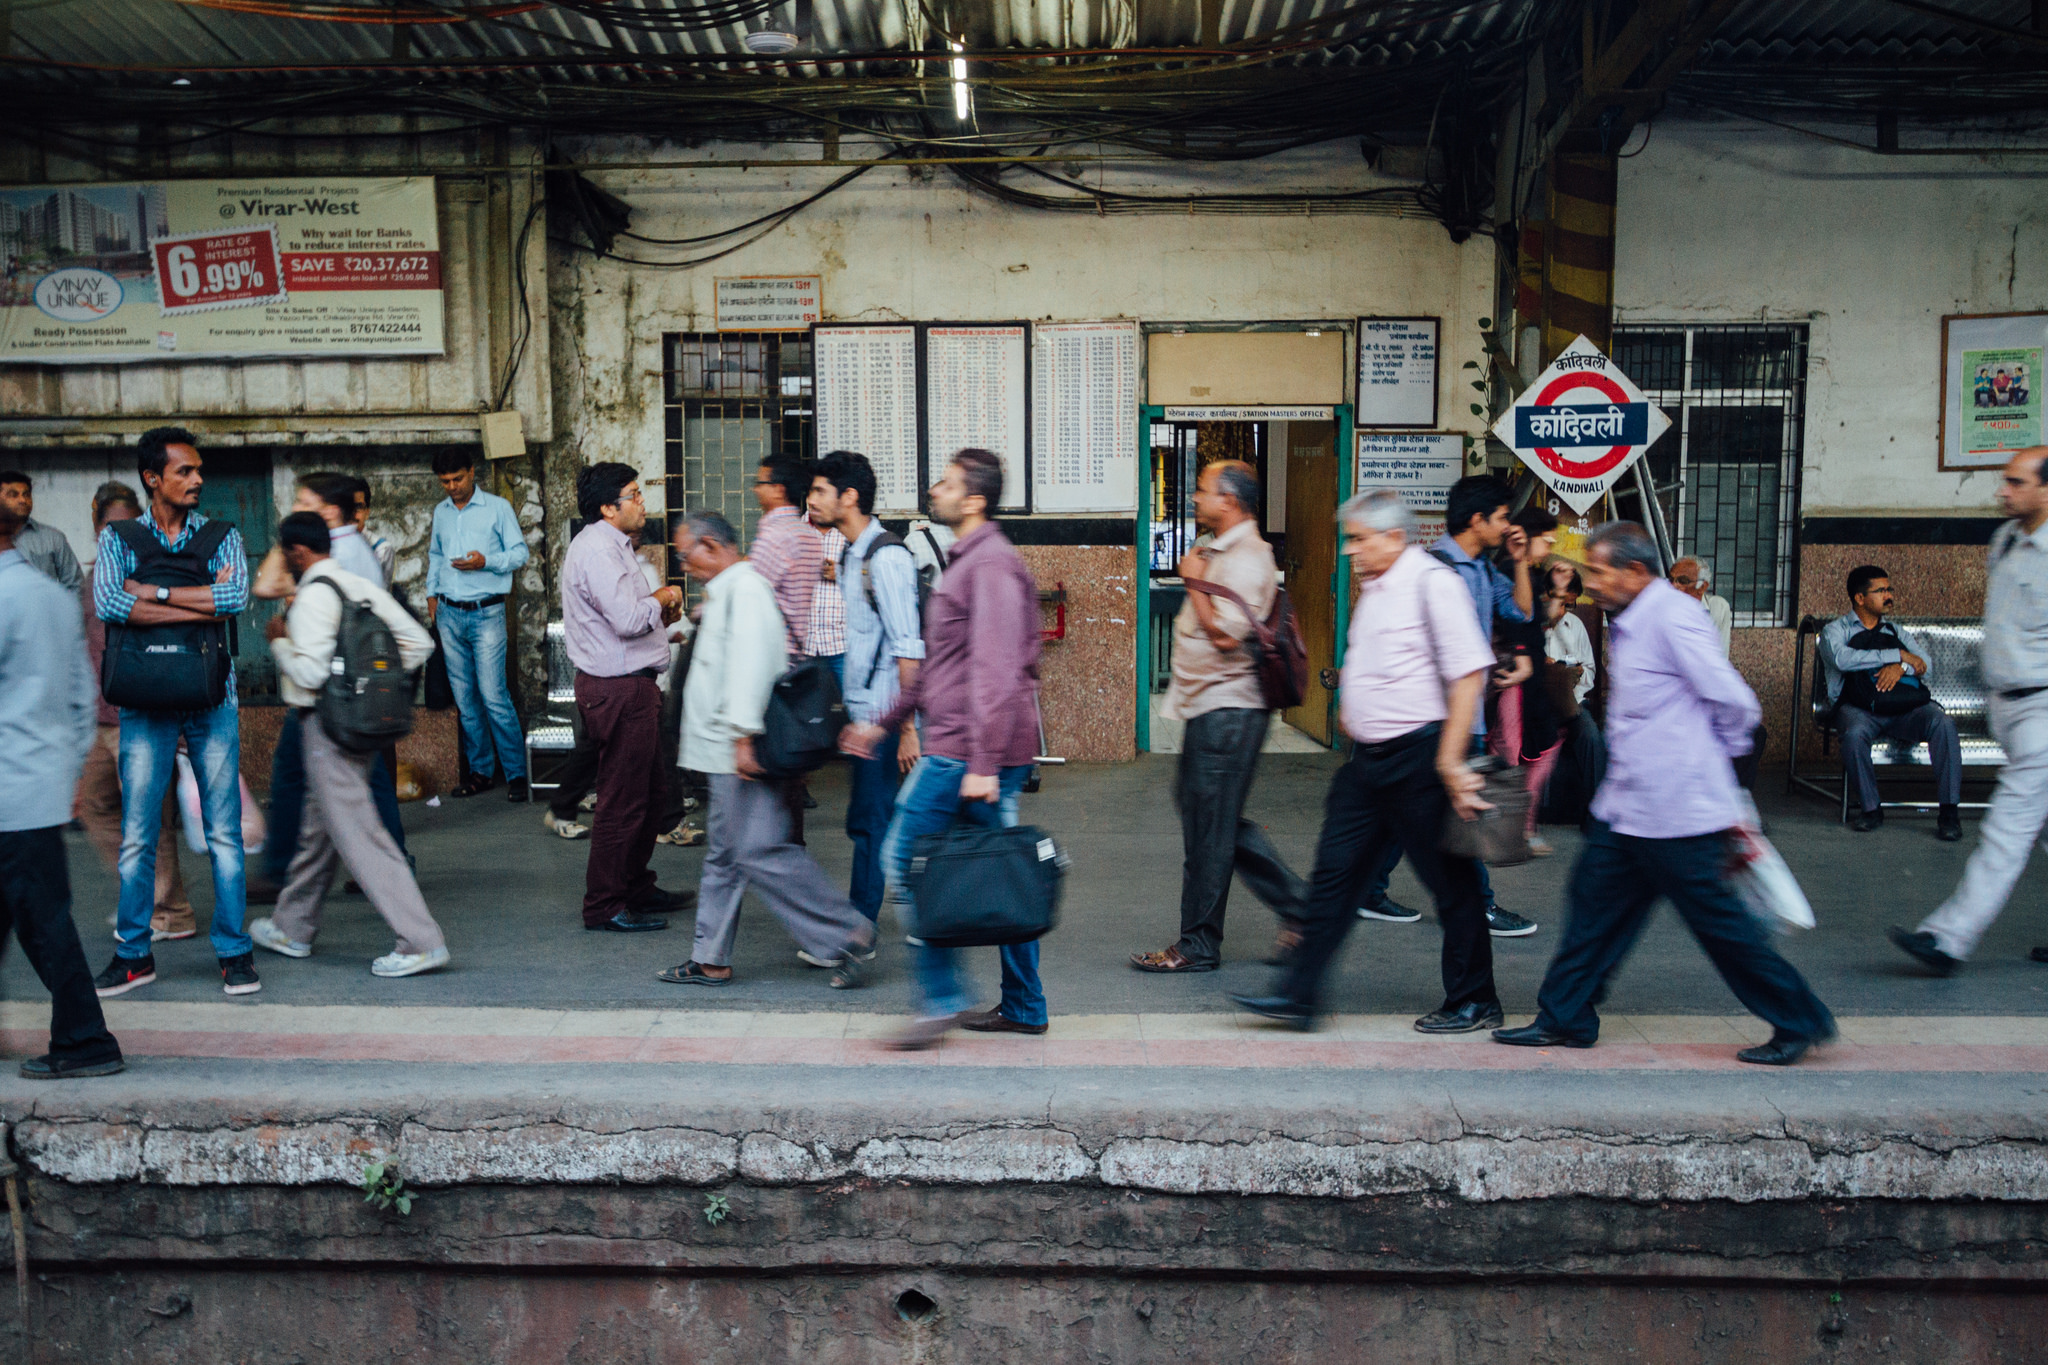 Afternoon in Kandivali Train Station, Mumbai